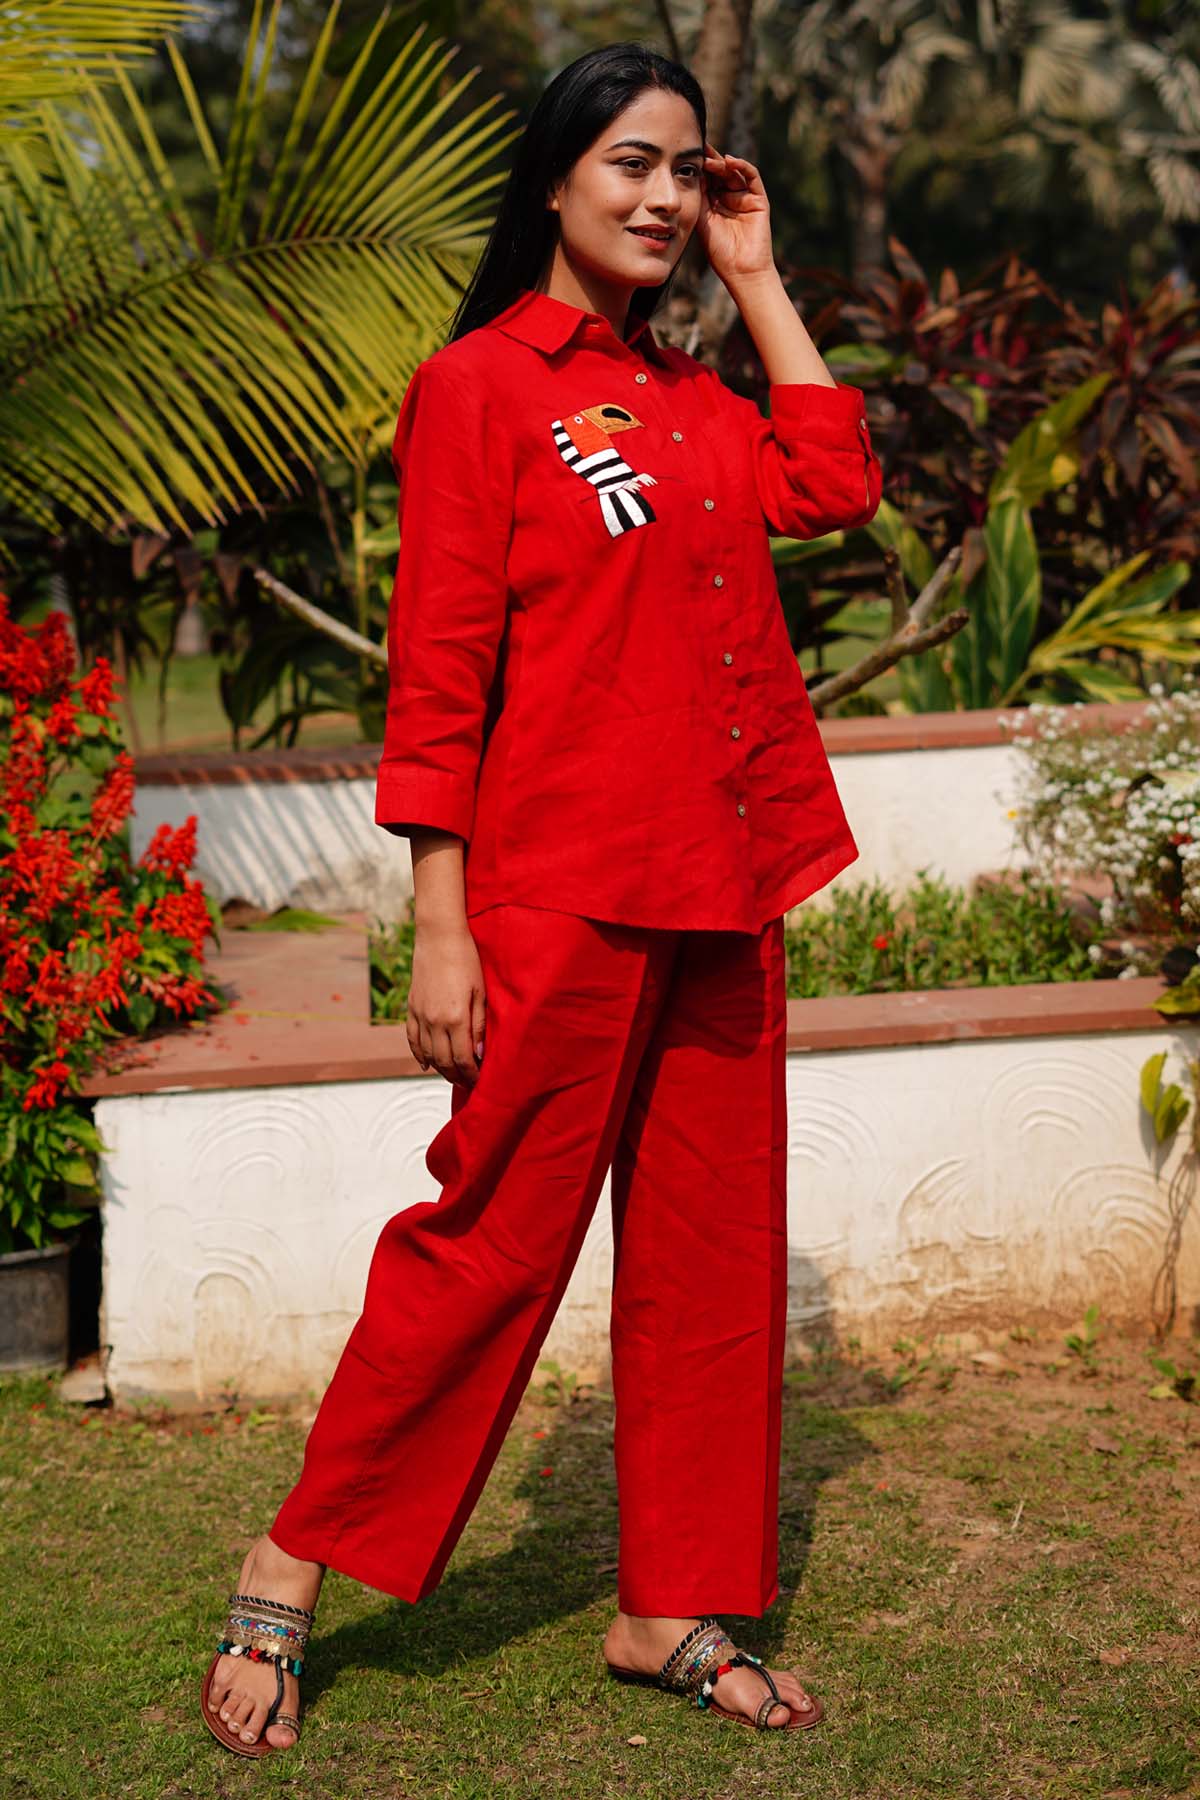 Designer Linen Bloom Fiery Finesse: Red Linen Pencil Pants for Effortless Power For Women Online at ScrollnShops